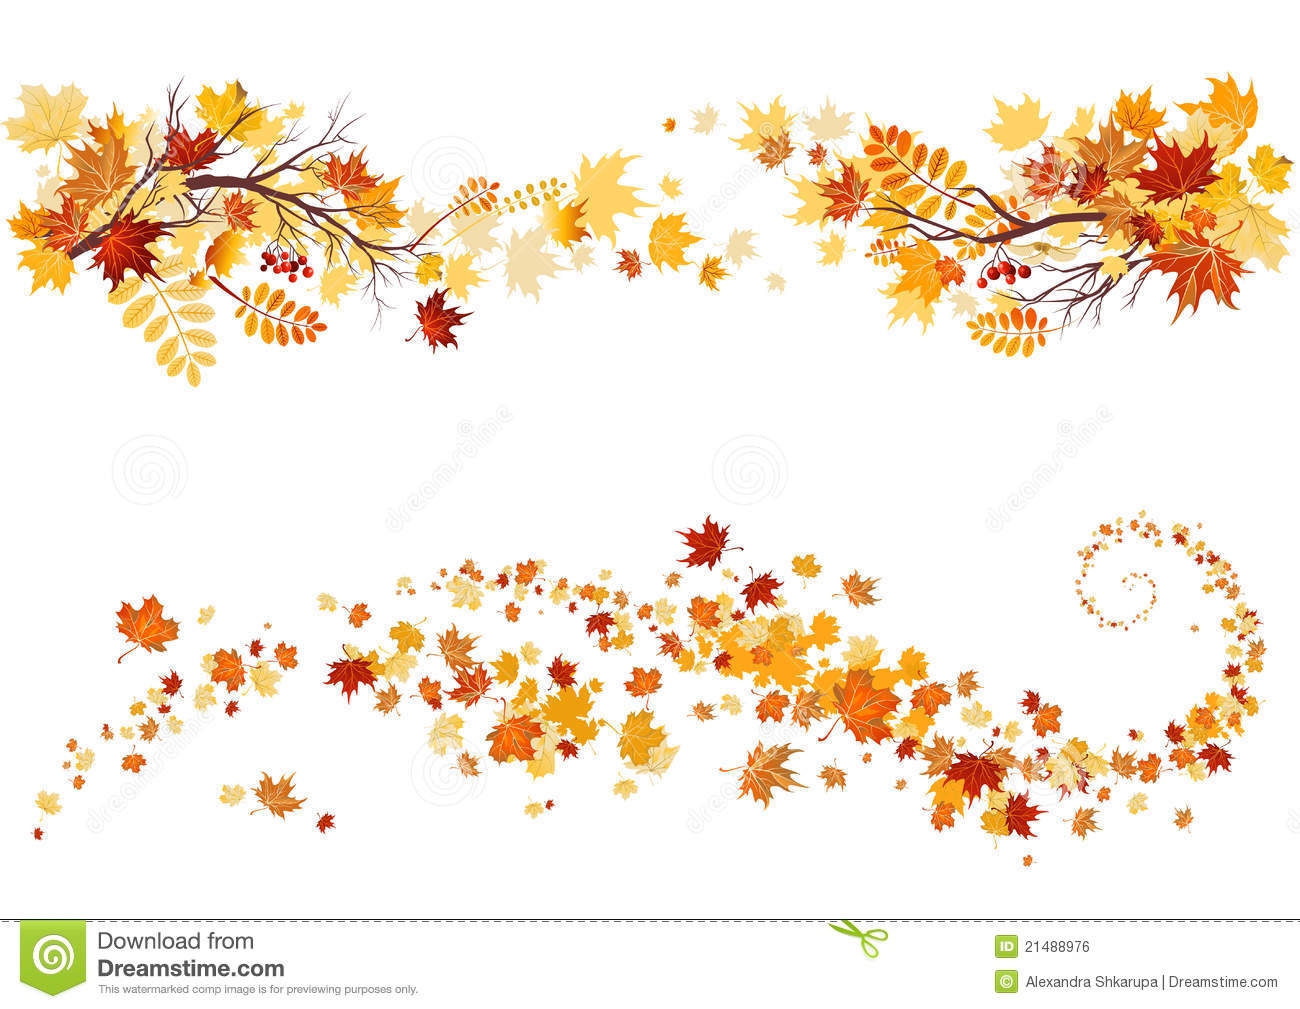 Autumn Leaves Border Royalty Free Stock Image   Image  21488976